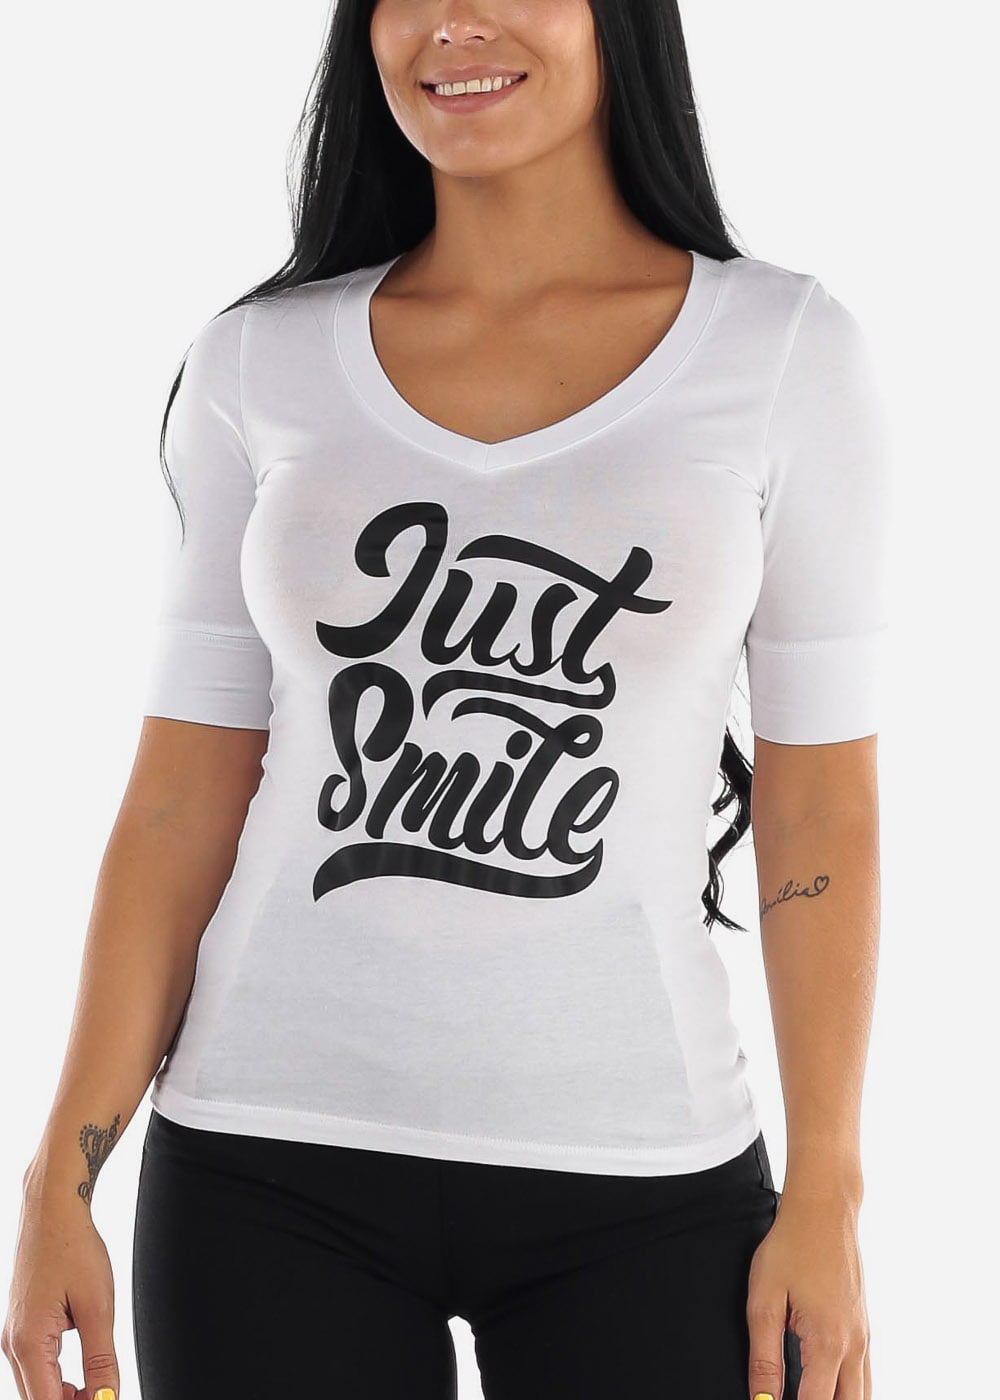 Moda Xpress - Womens Juniors V-Neck Graphic Tee - White Graphic T-Shirt - Cute Graphic Top ...